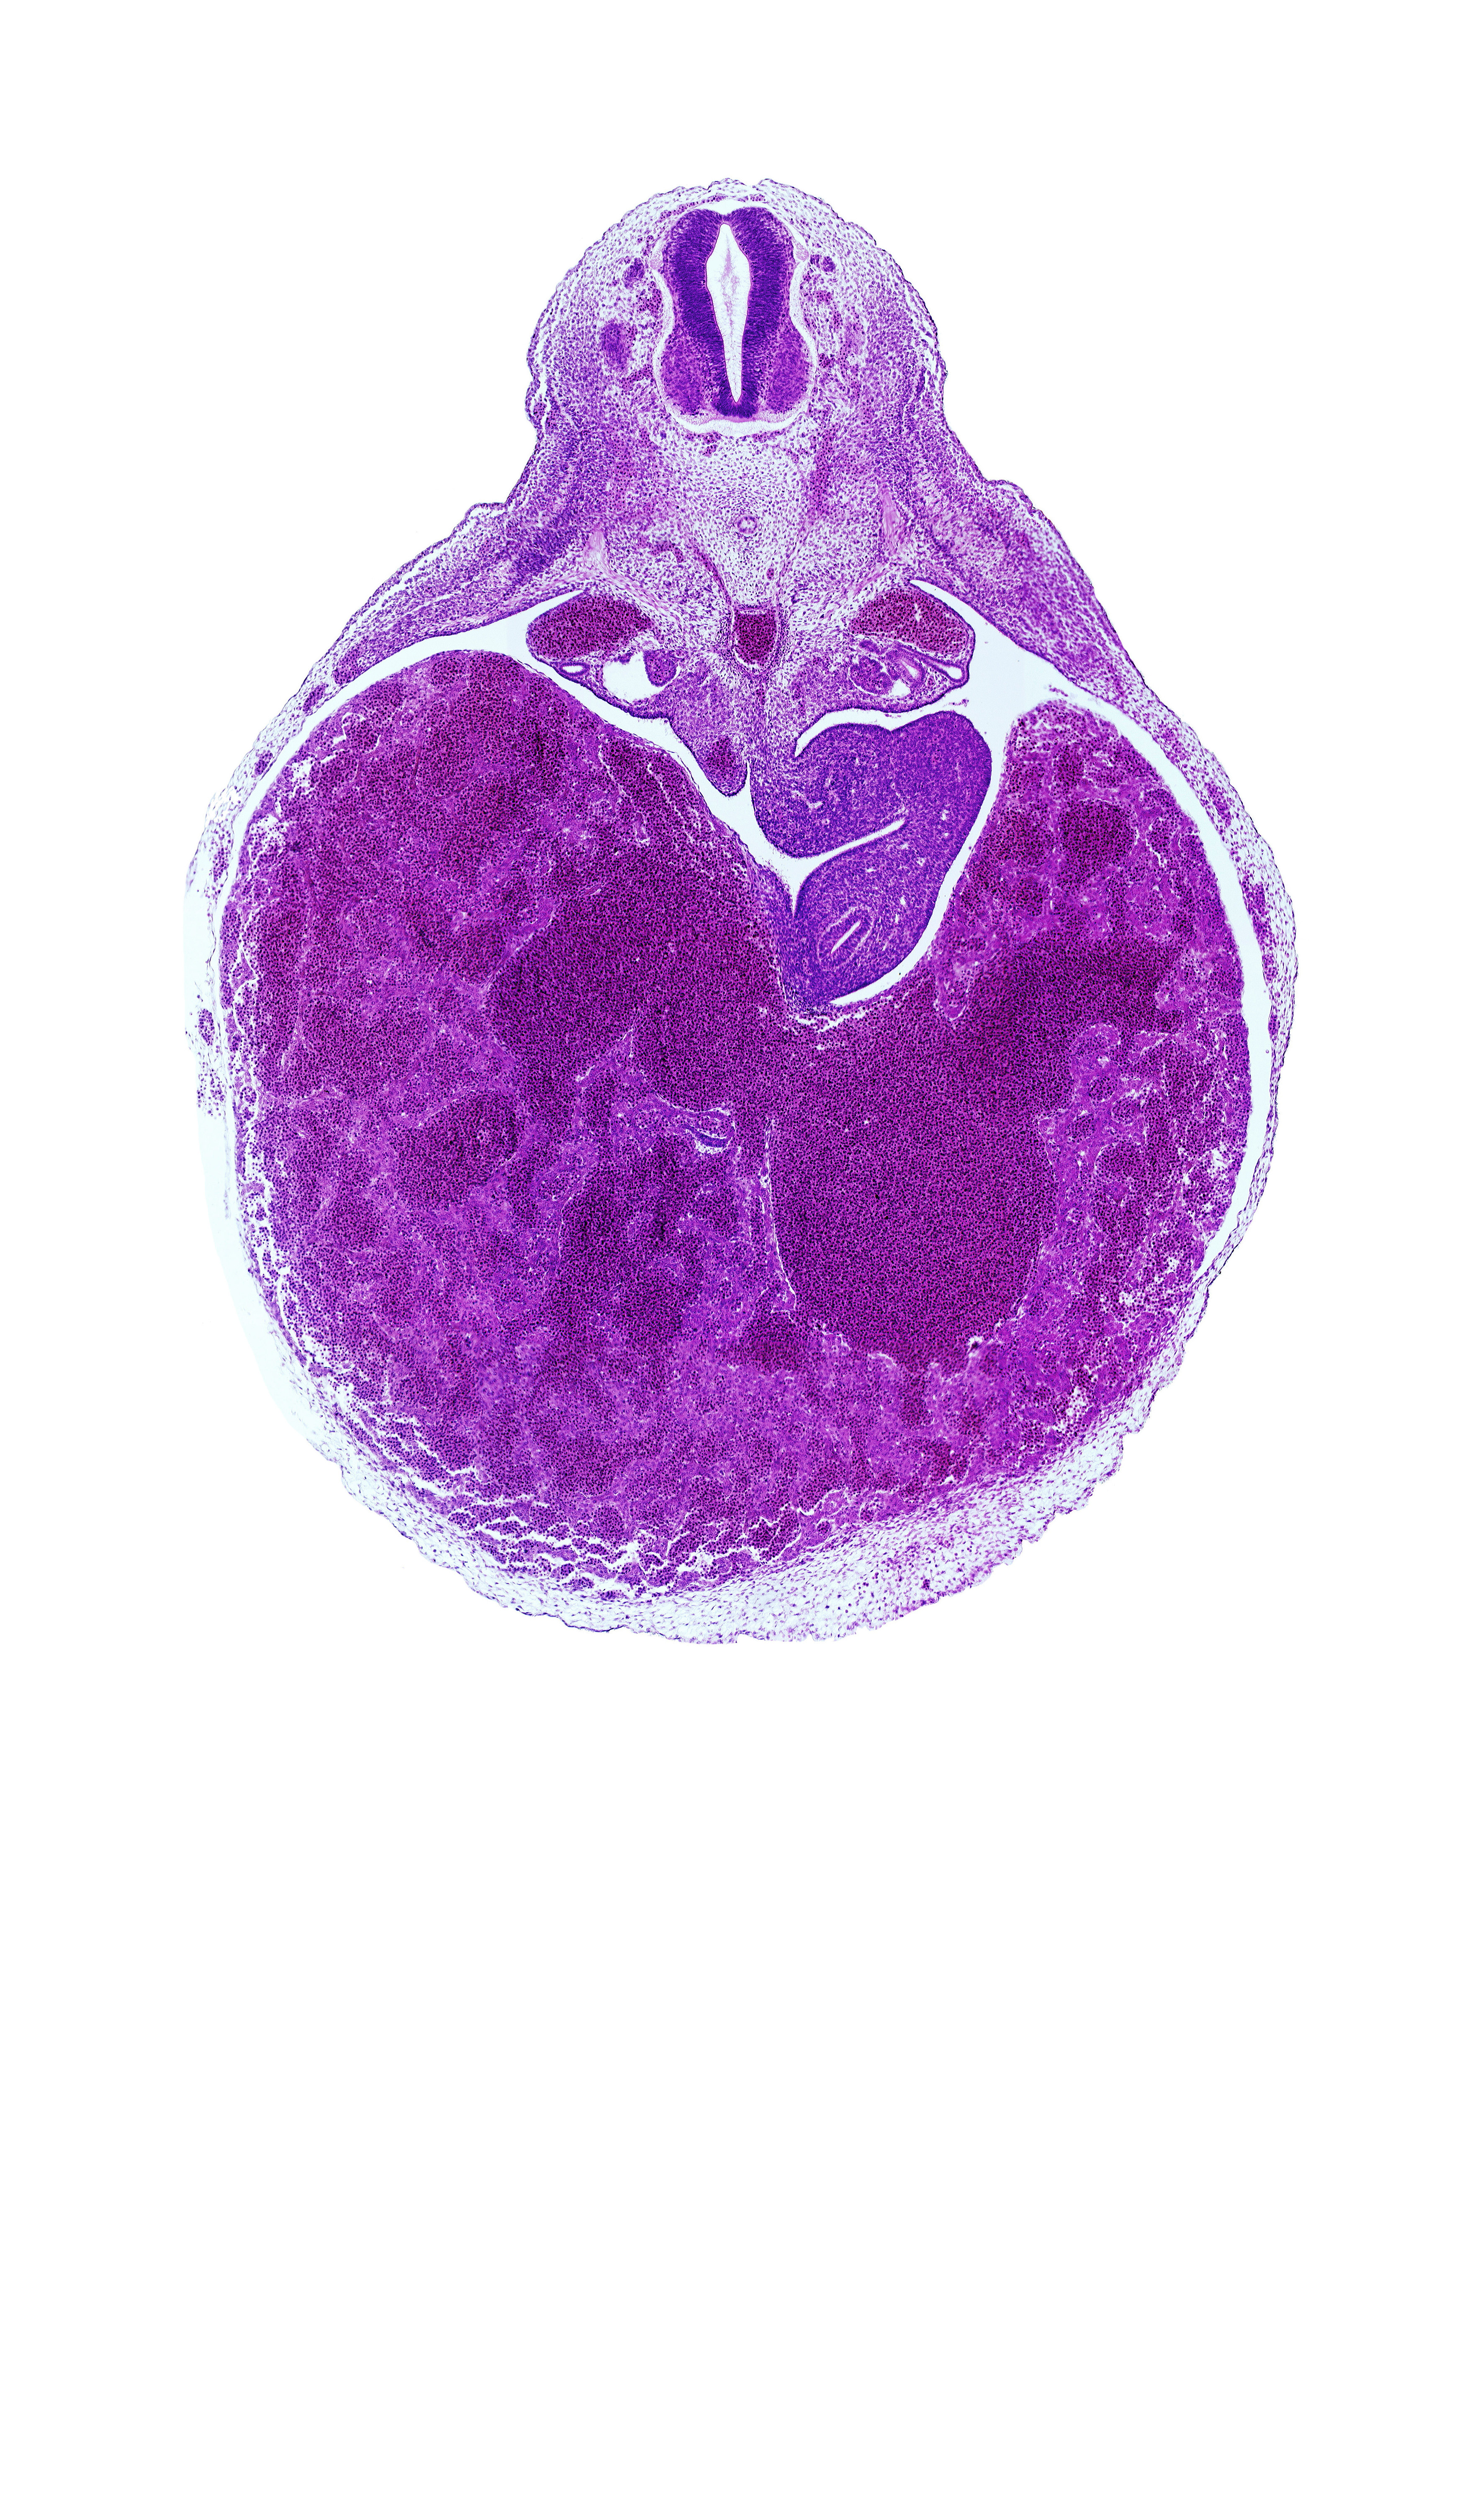 T-3 / T-4 interganglion region, aorta, dorsal mesogastrium, ductus venosus, duodenum, left hepatic vein, liver, mesonephric duct, neural arch blastema, omental foramen, postcardinal vein, right hepatic vein